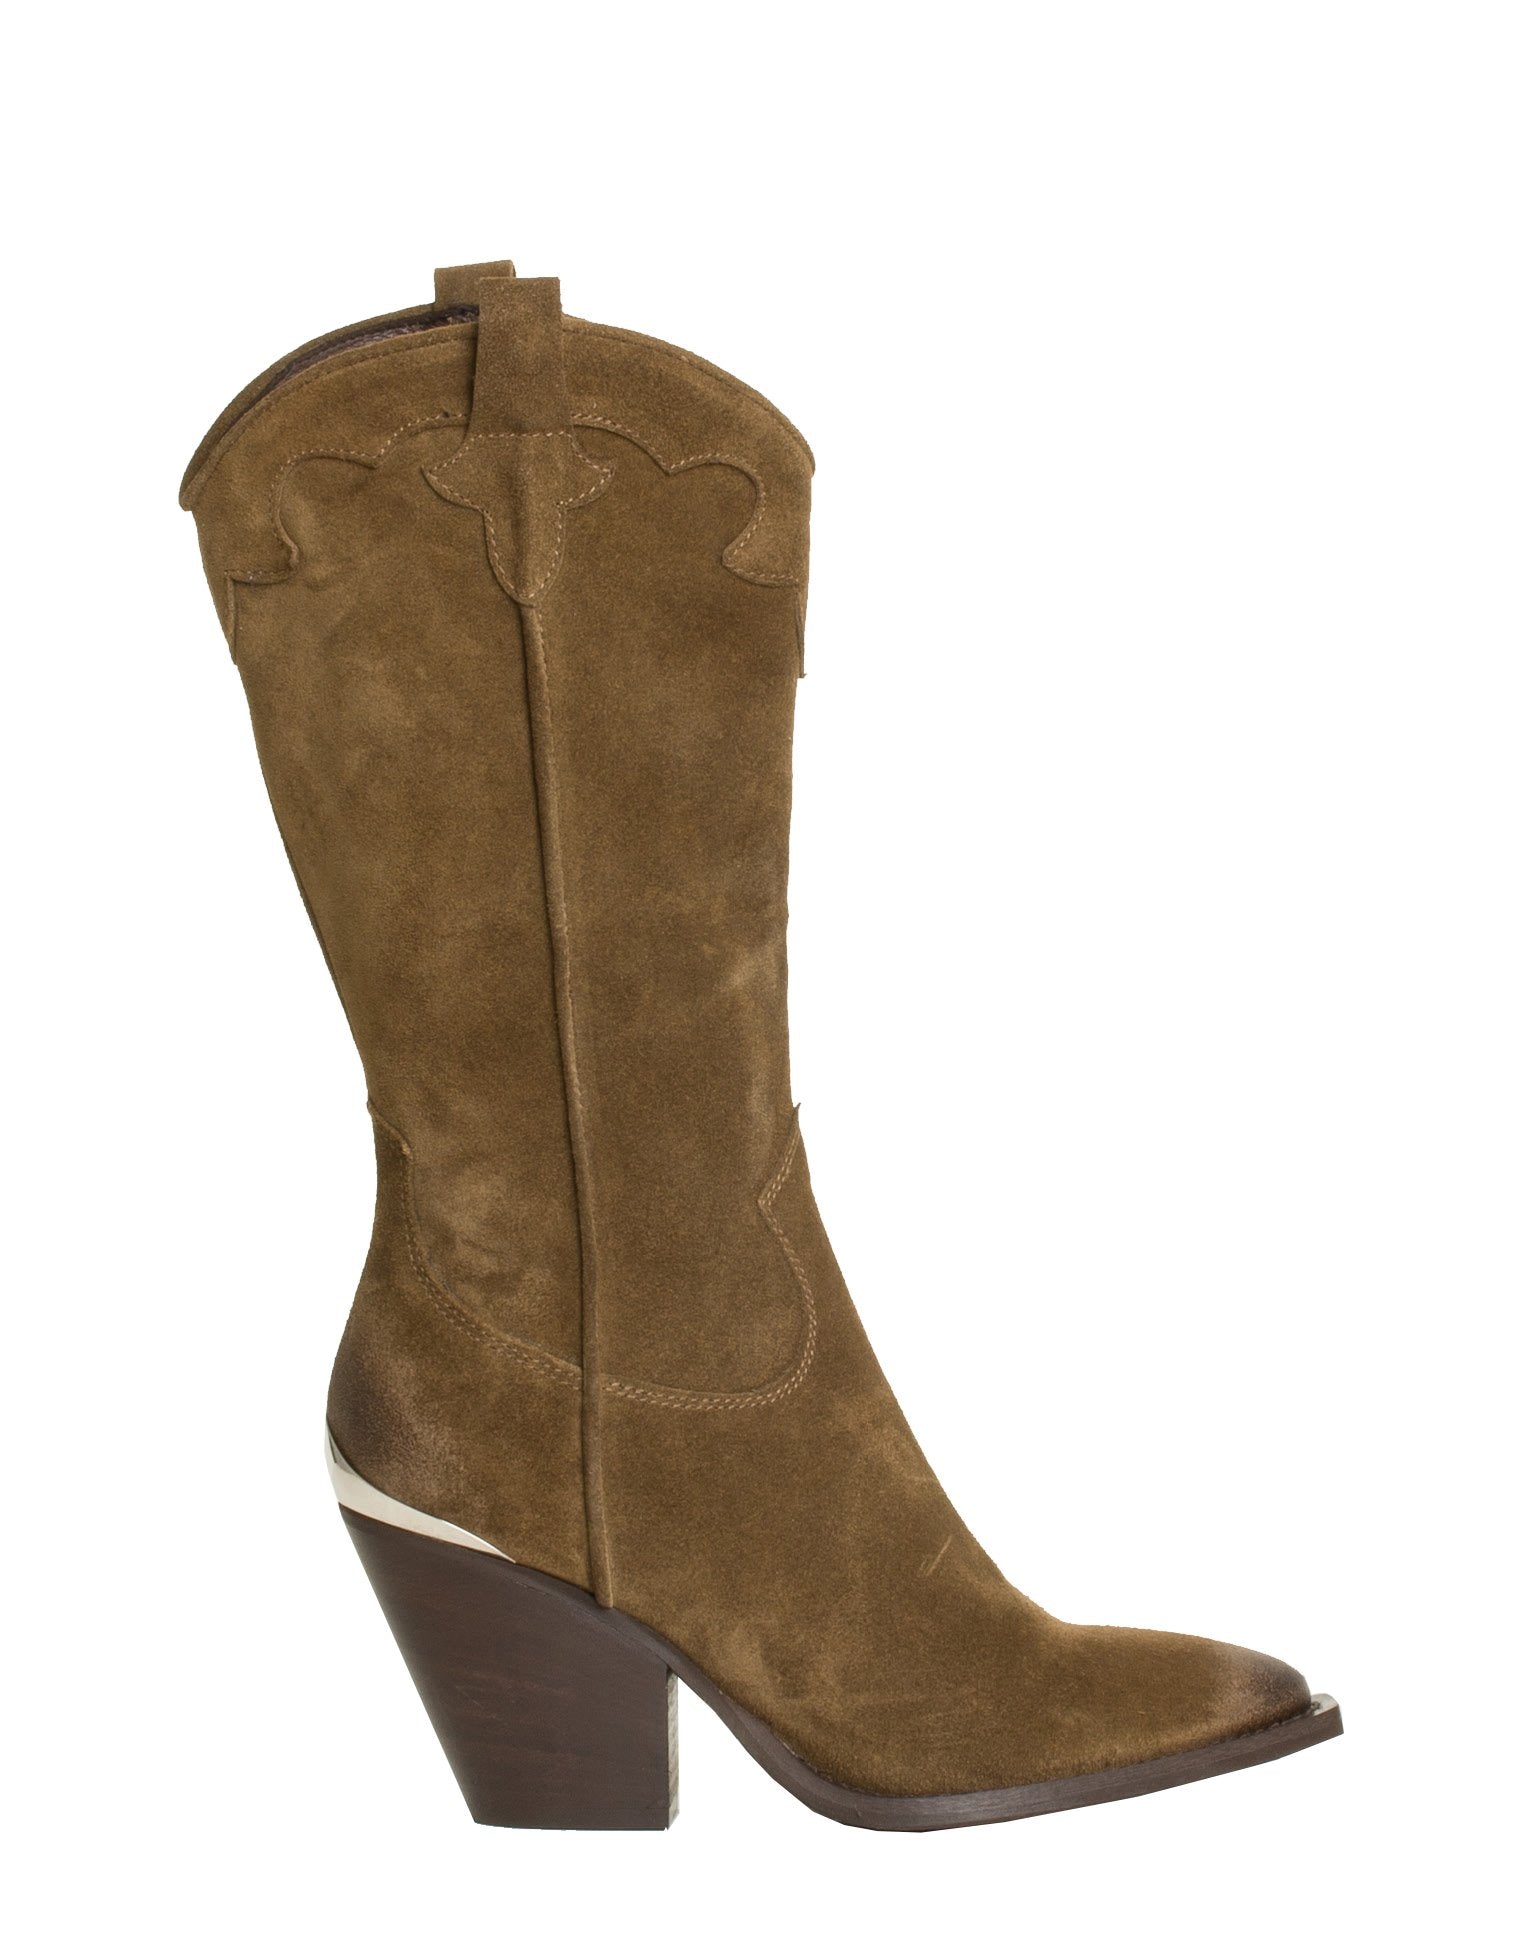 Brooke Suede Antelope Boots BROOKE-ANTILOPE-1 - 11